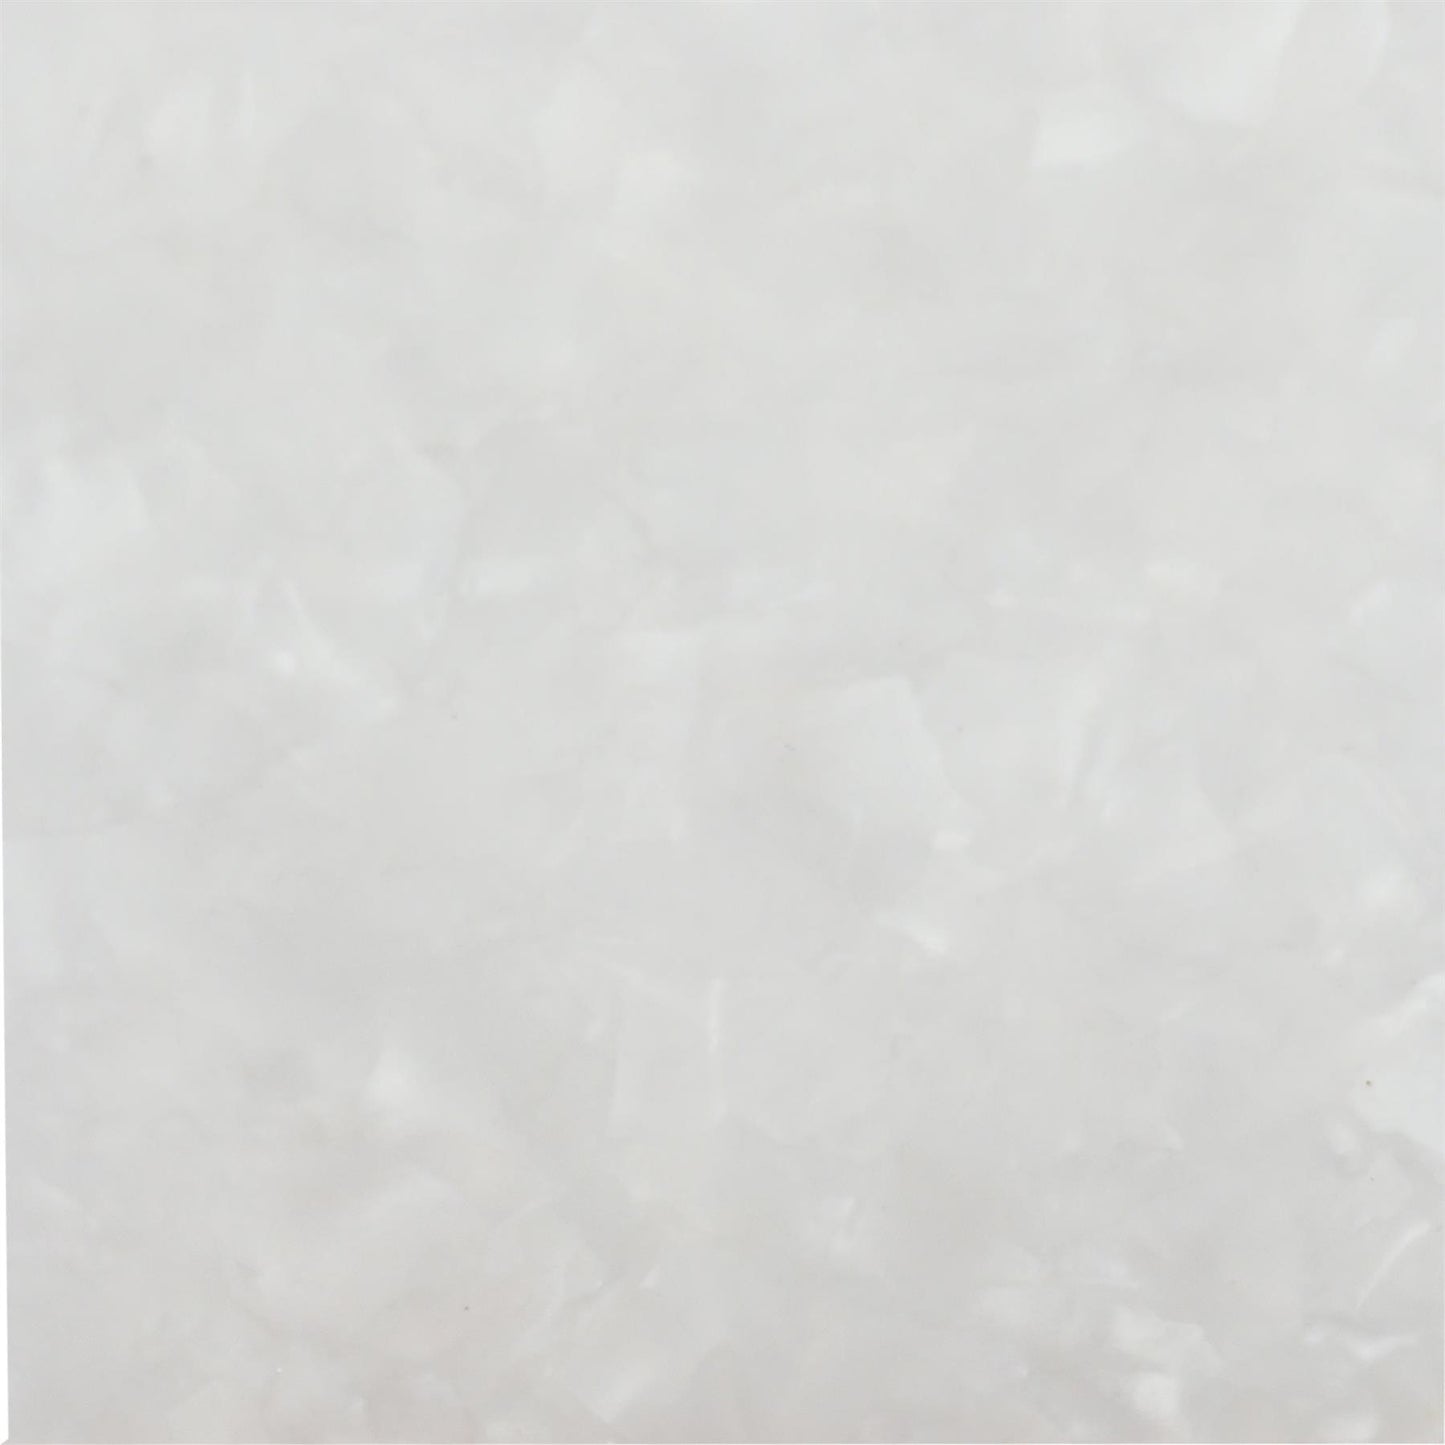 Incudo White Pearloid Acrylic Sheet - 300x250x3mm